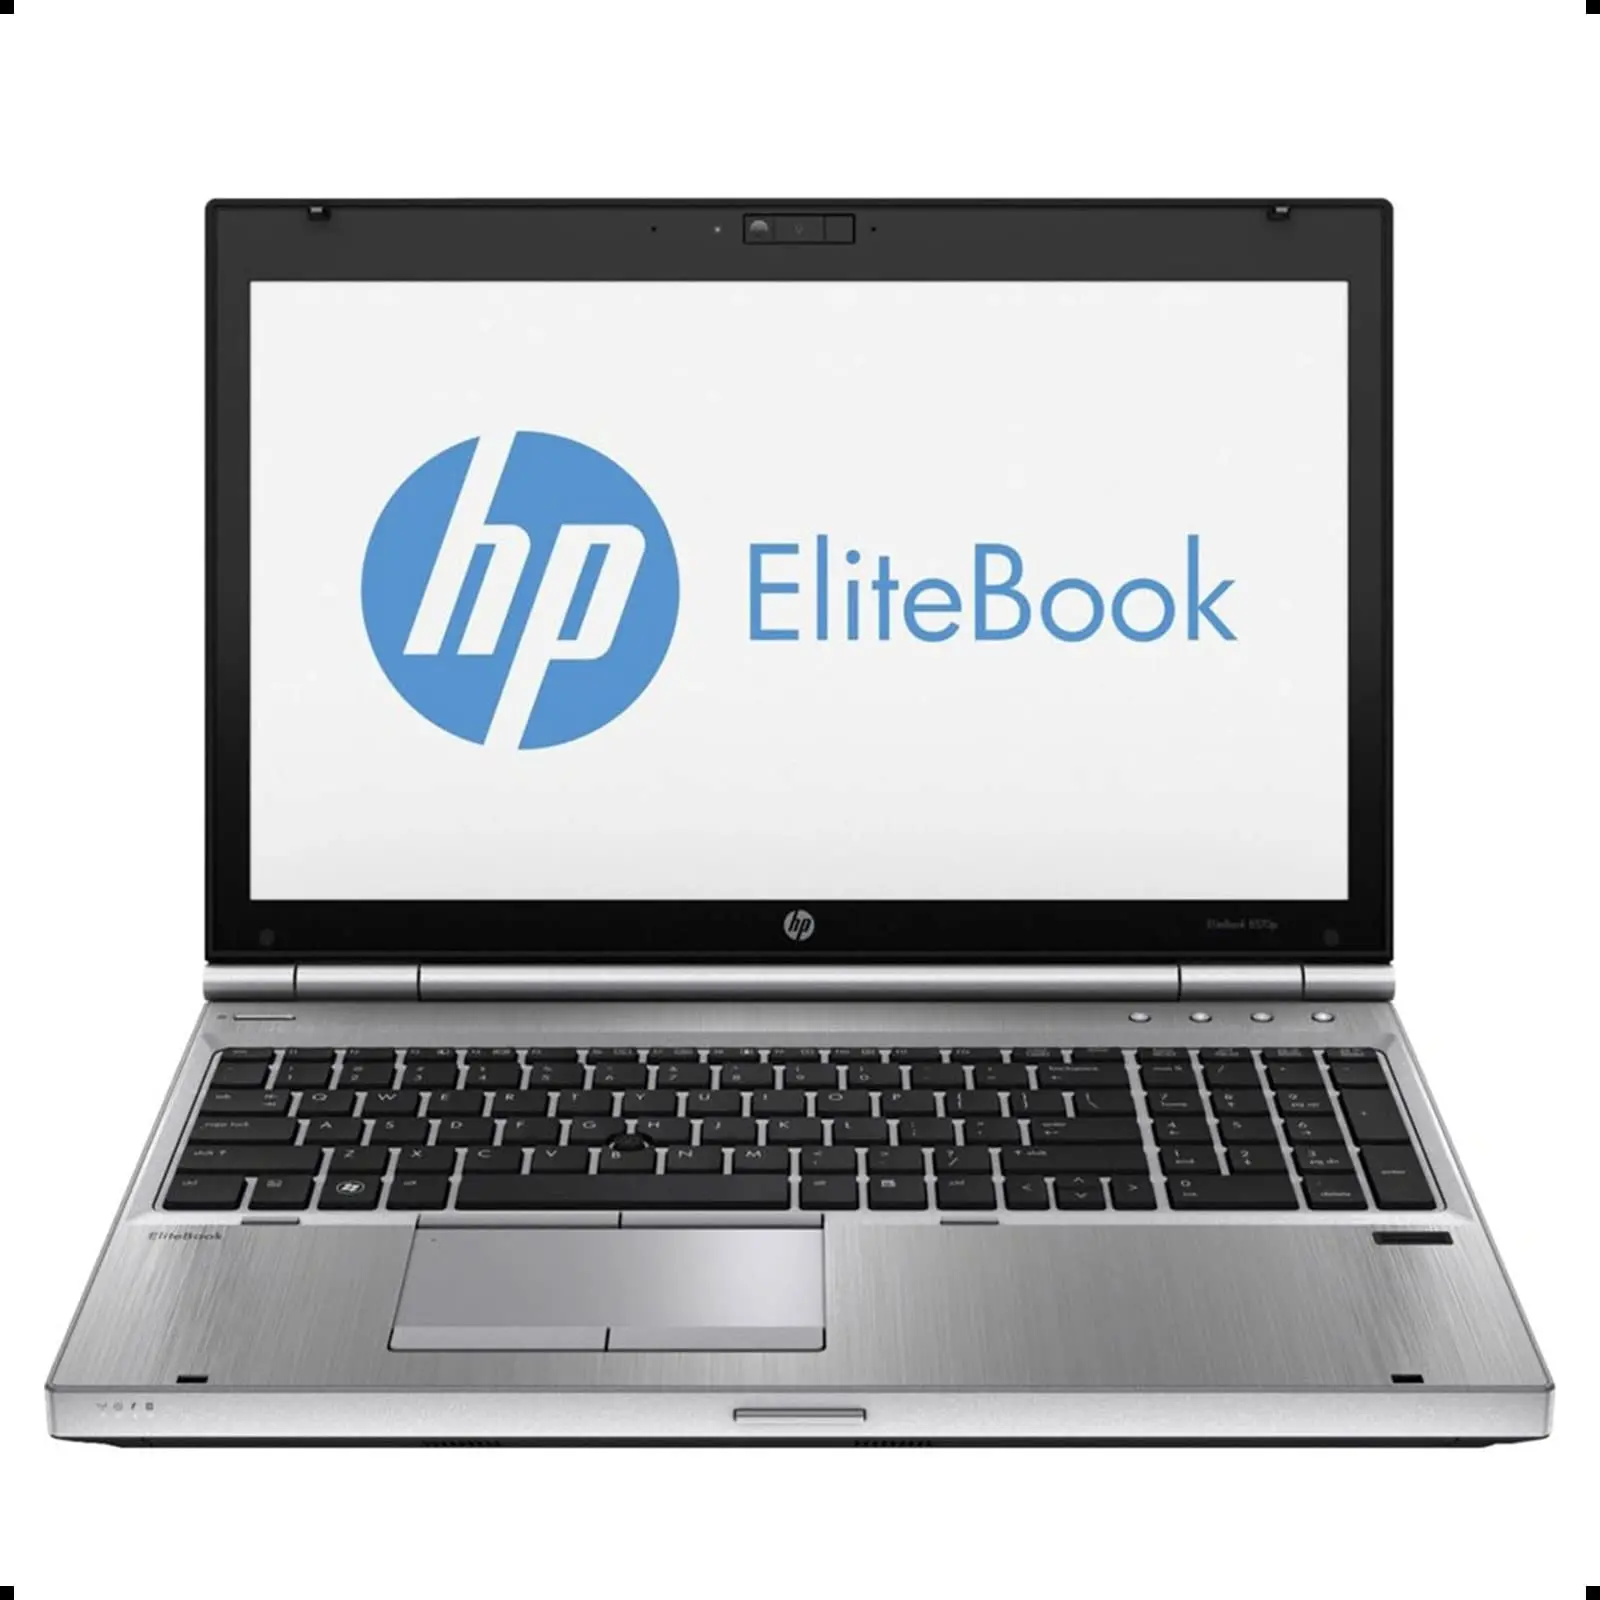 Hp elitebook 8570p: powerful laptop for professionals